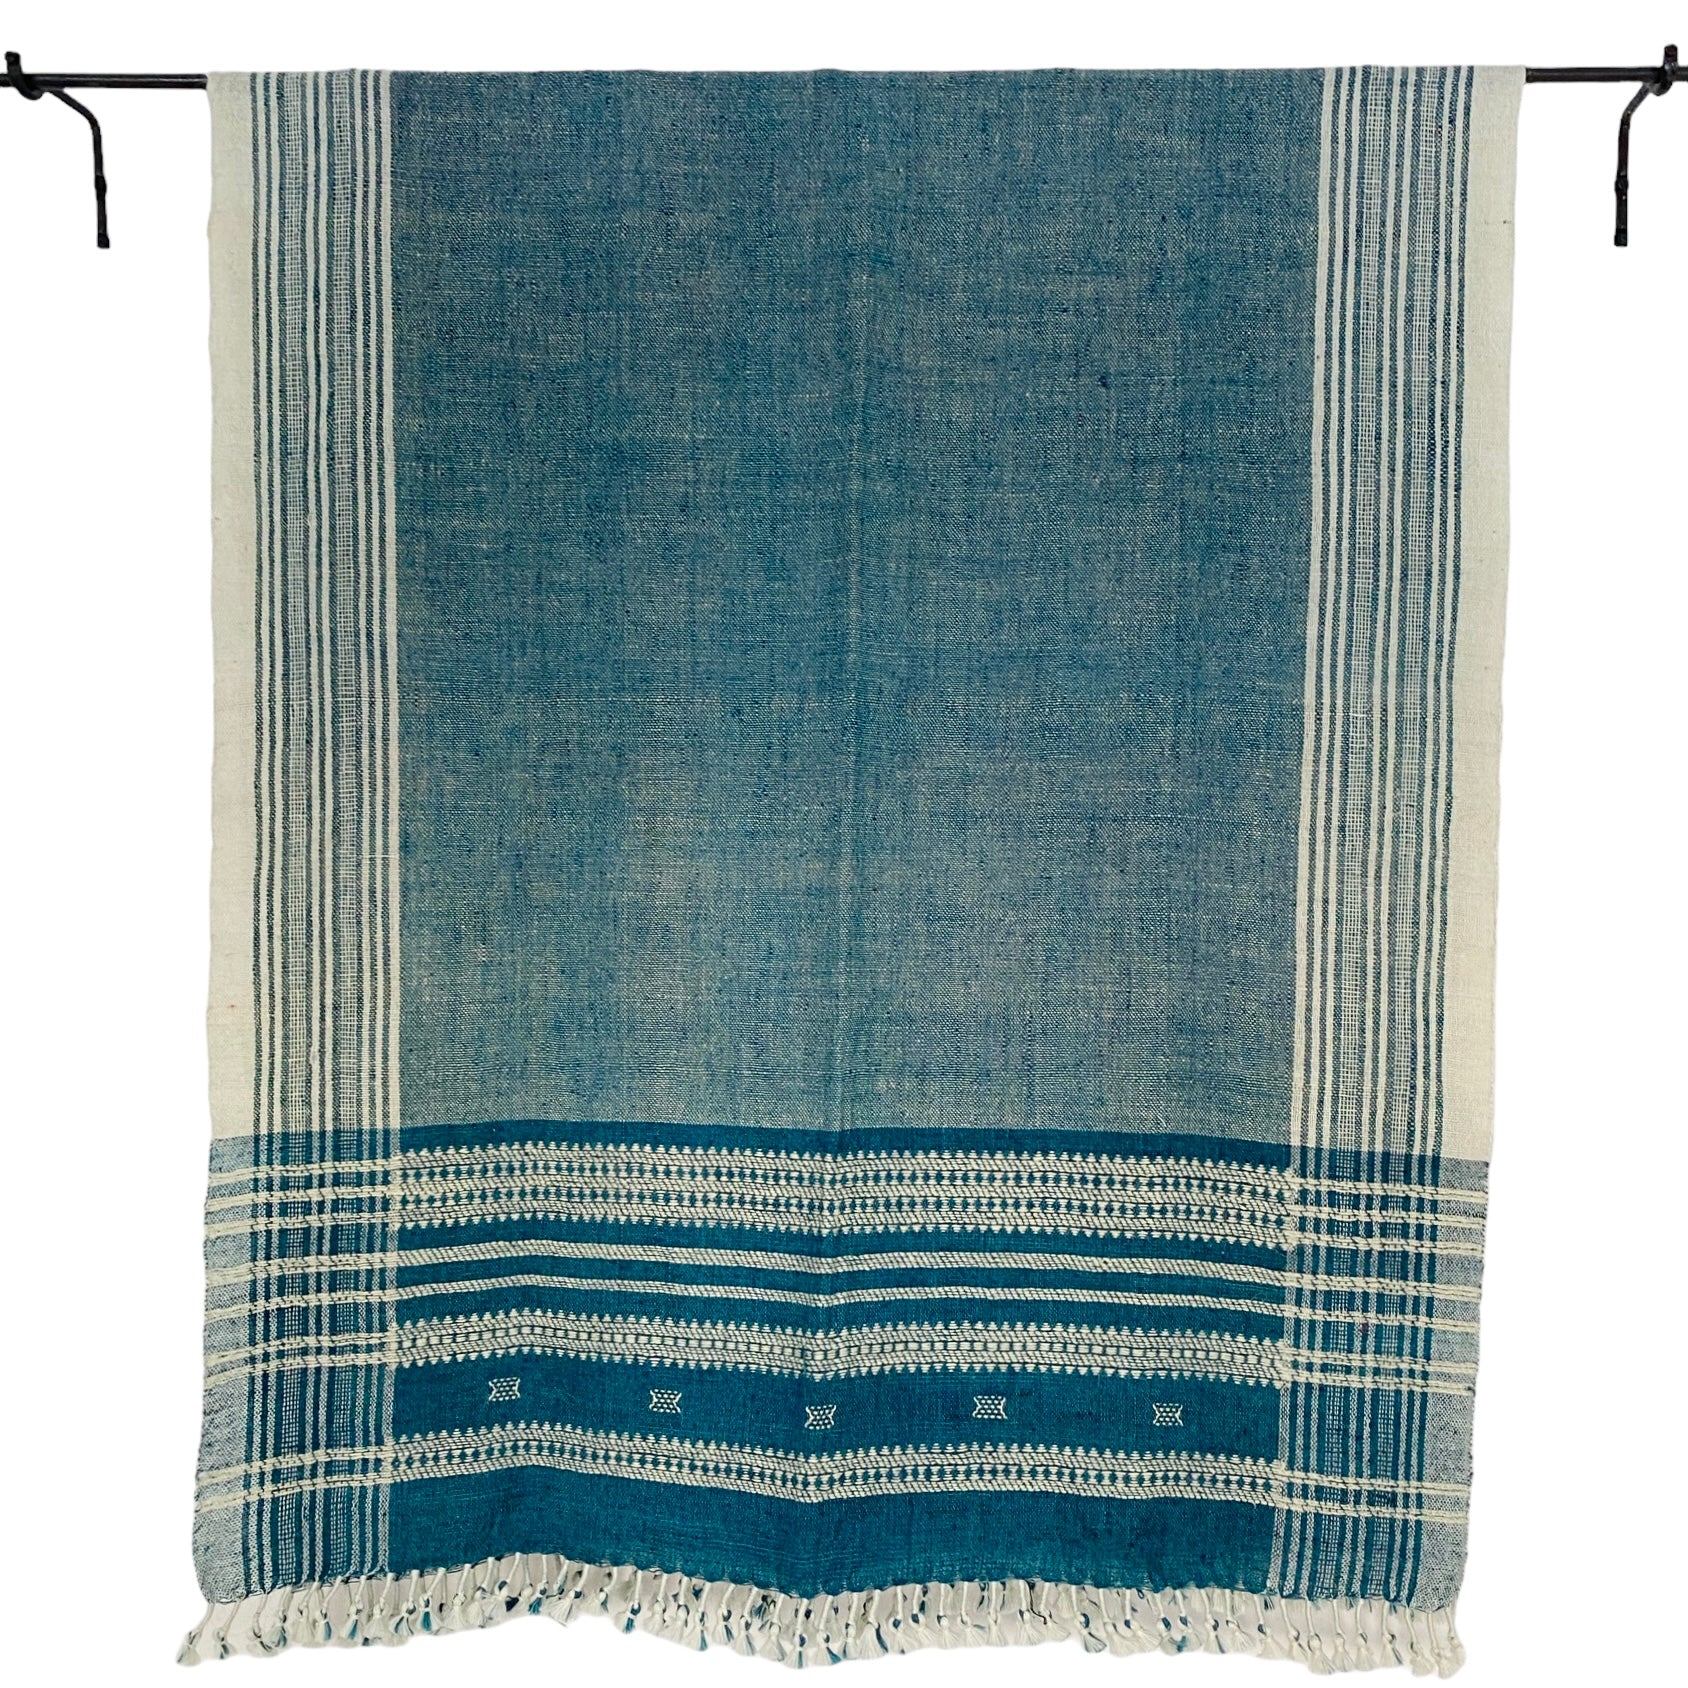 Desi khadi wool blanket - No 15